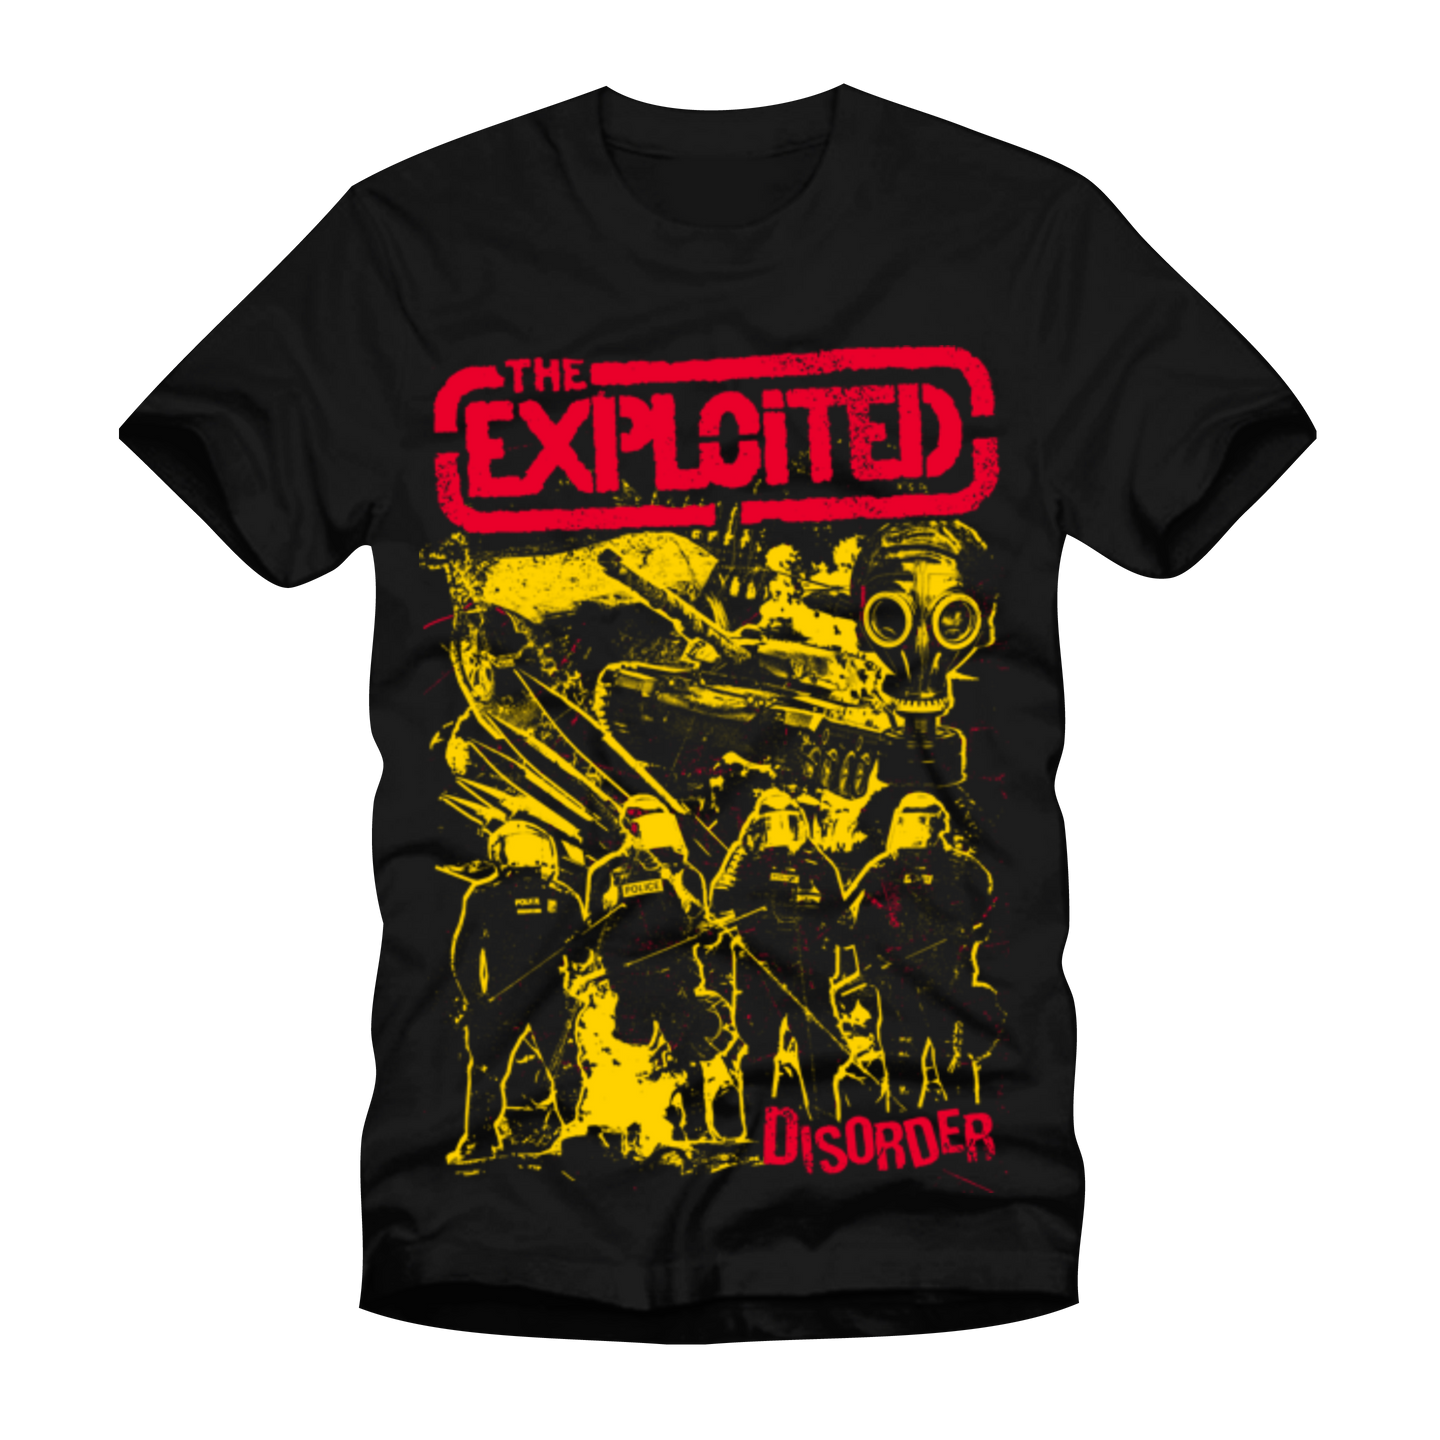 The Exploited - Disorder T Shirt